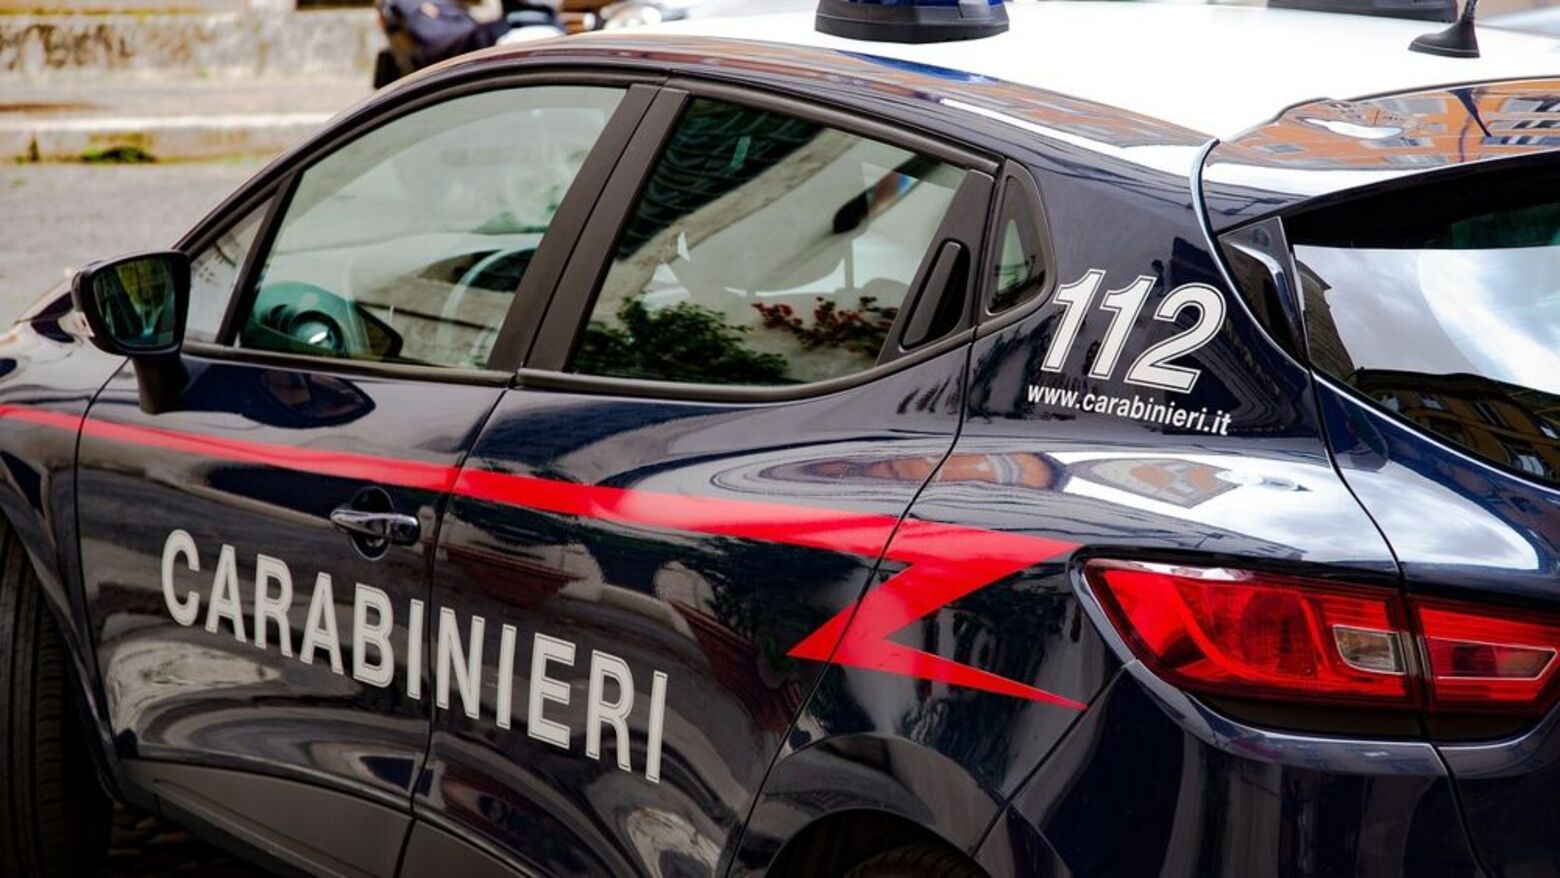 Ruggi salerno ferite arma fuoco indagano carabinieri